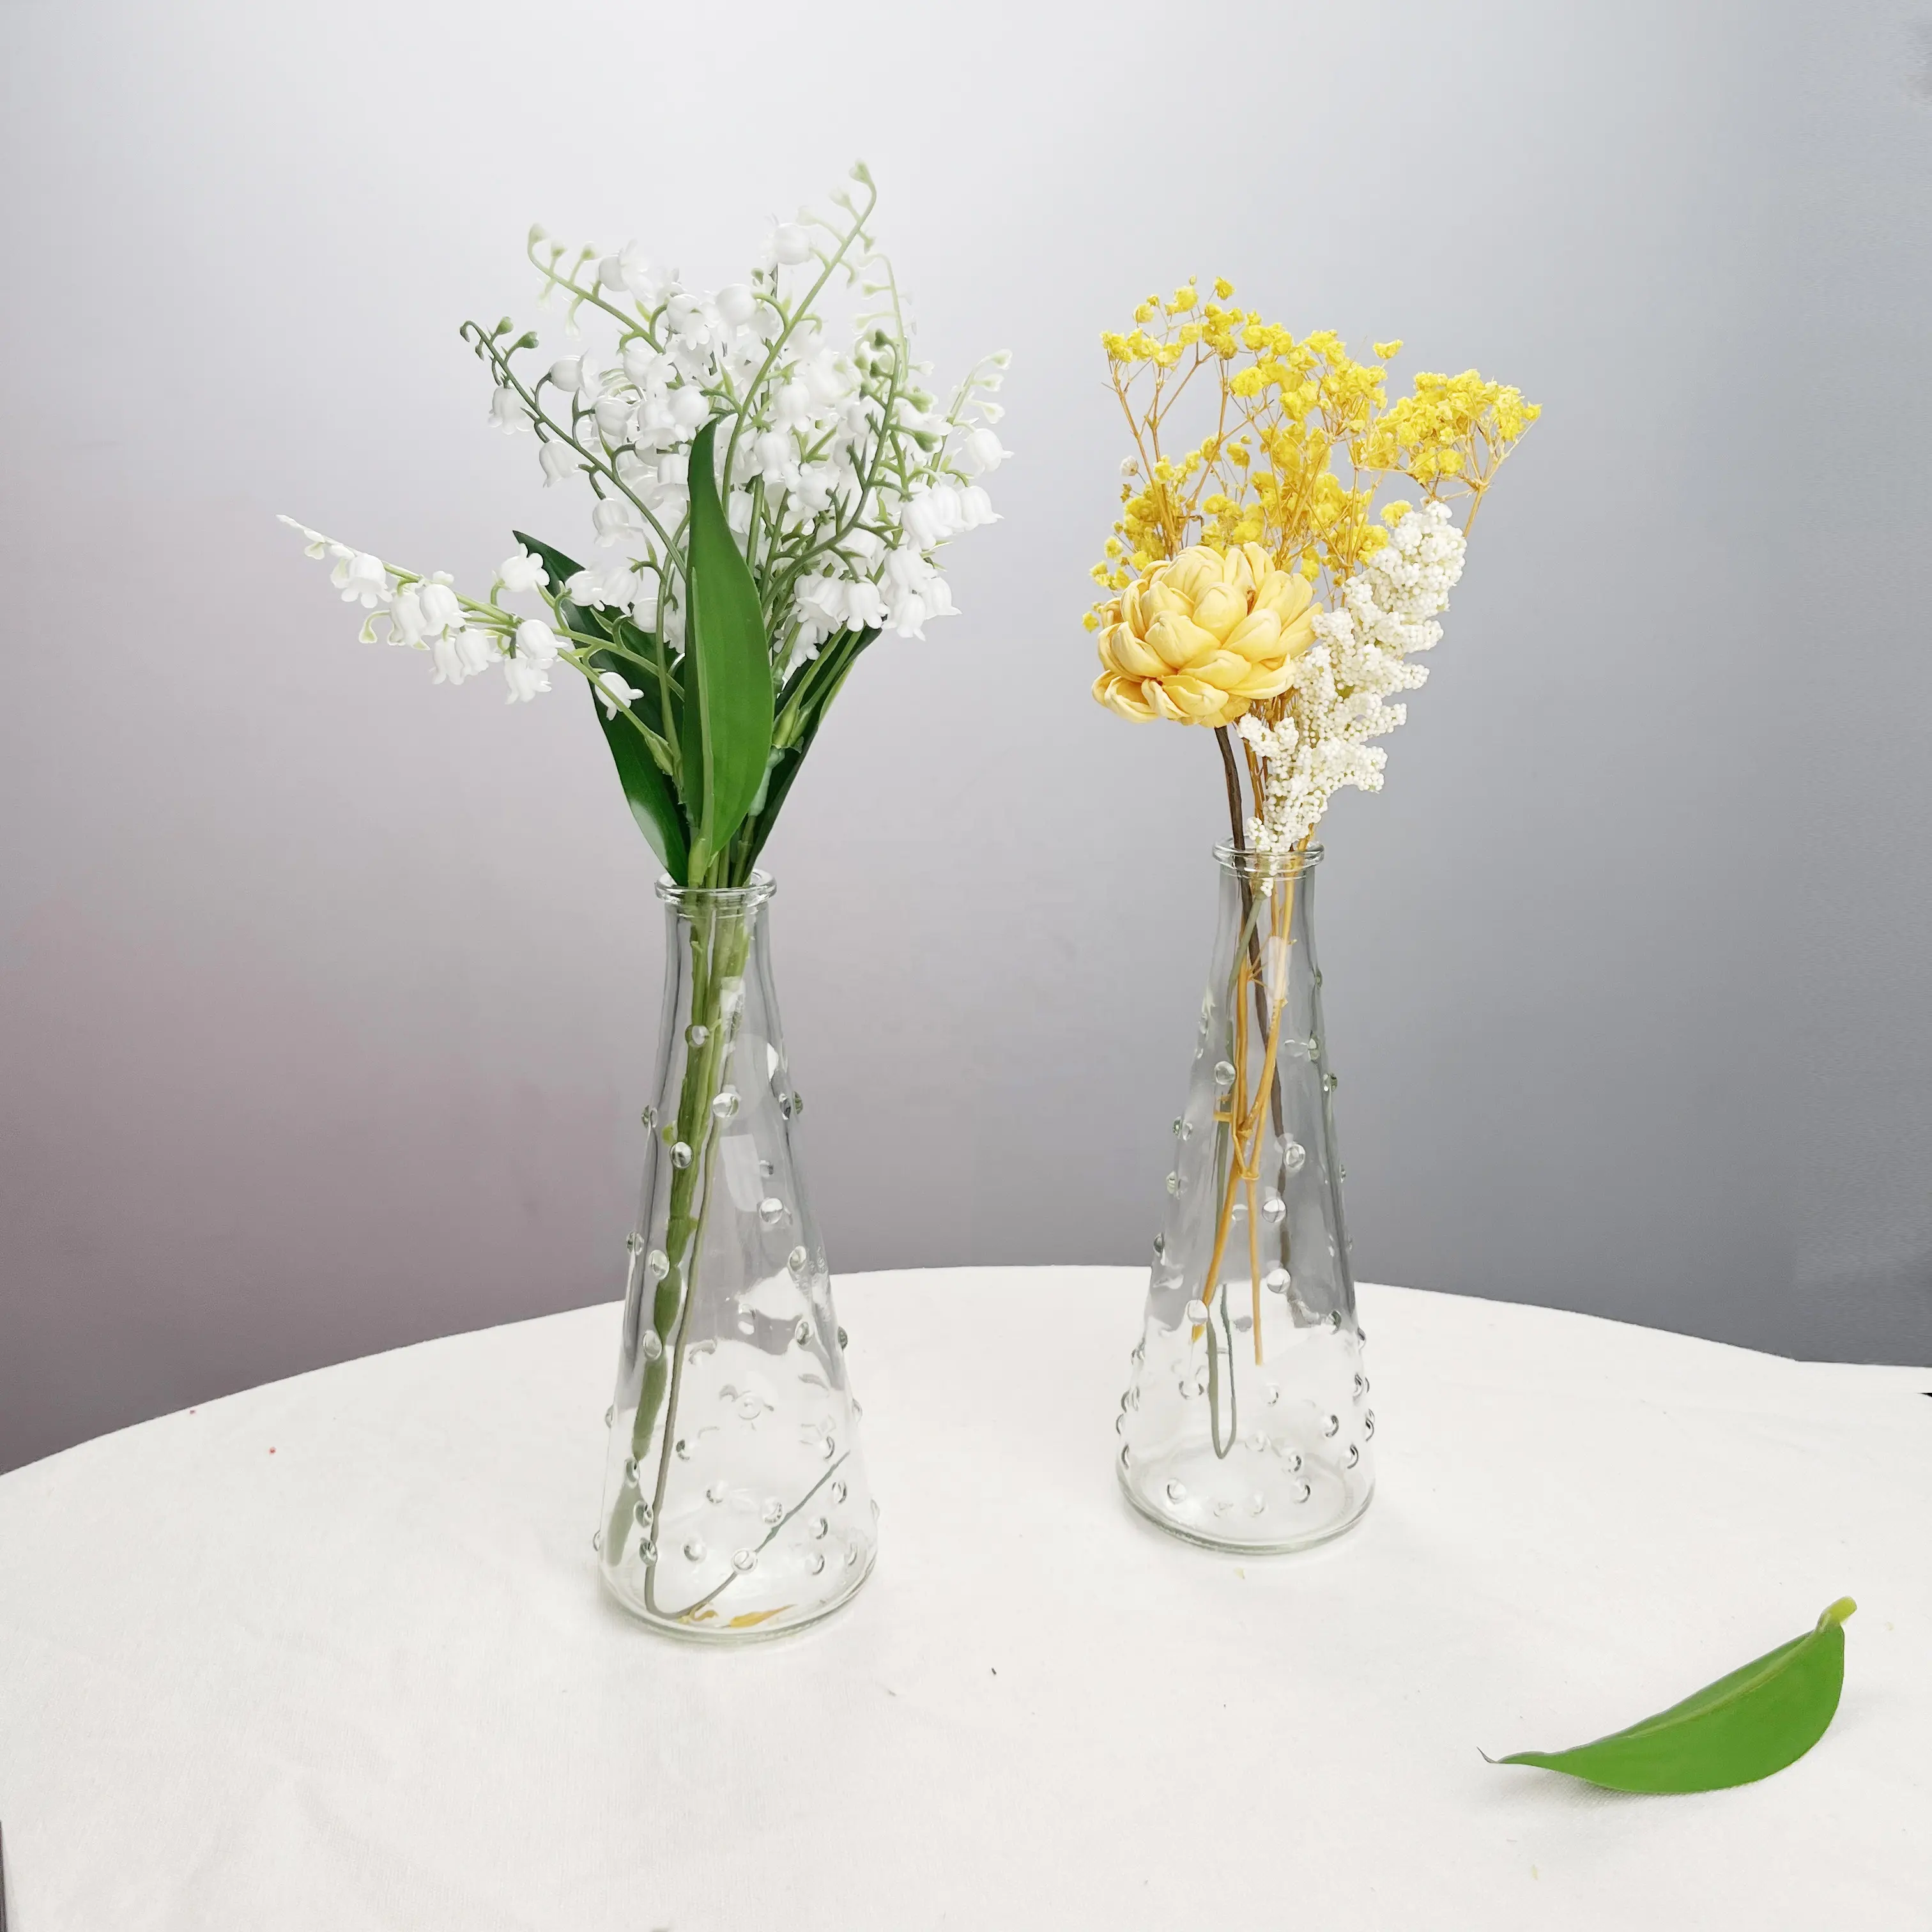 Wingo Modern Events Vase Decor Flower Vase Wedding Centerpiece Table Decoration Glass Cone Flower Vase For Events Parties